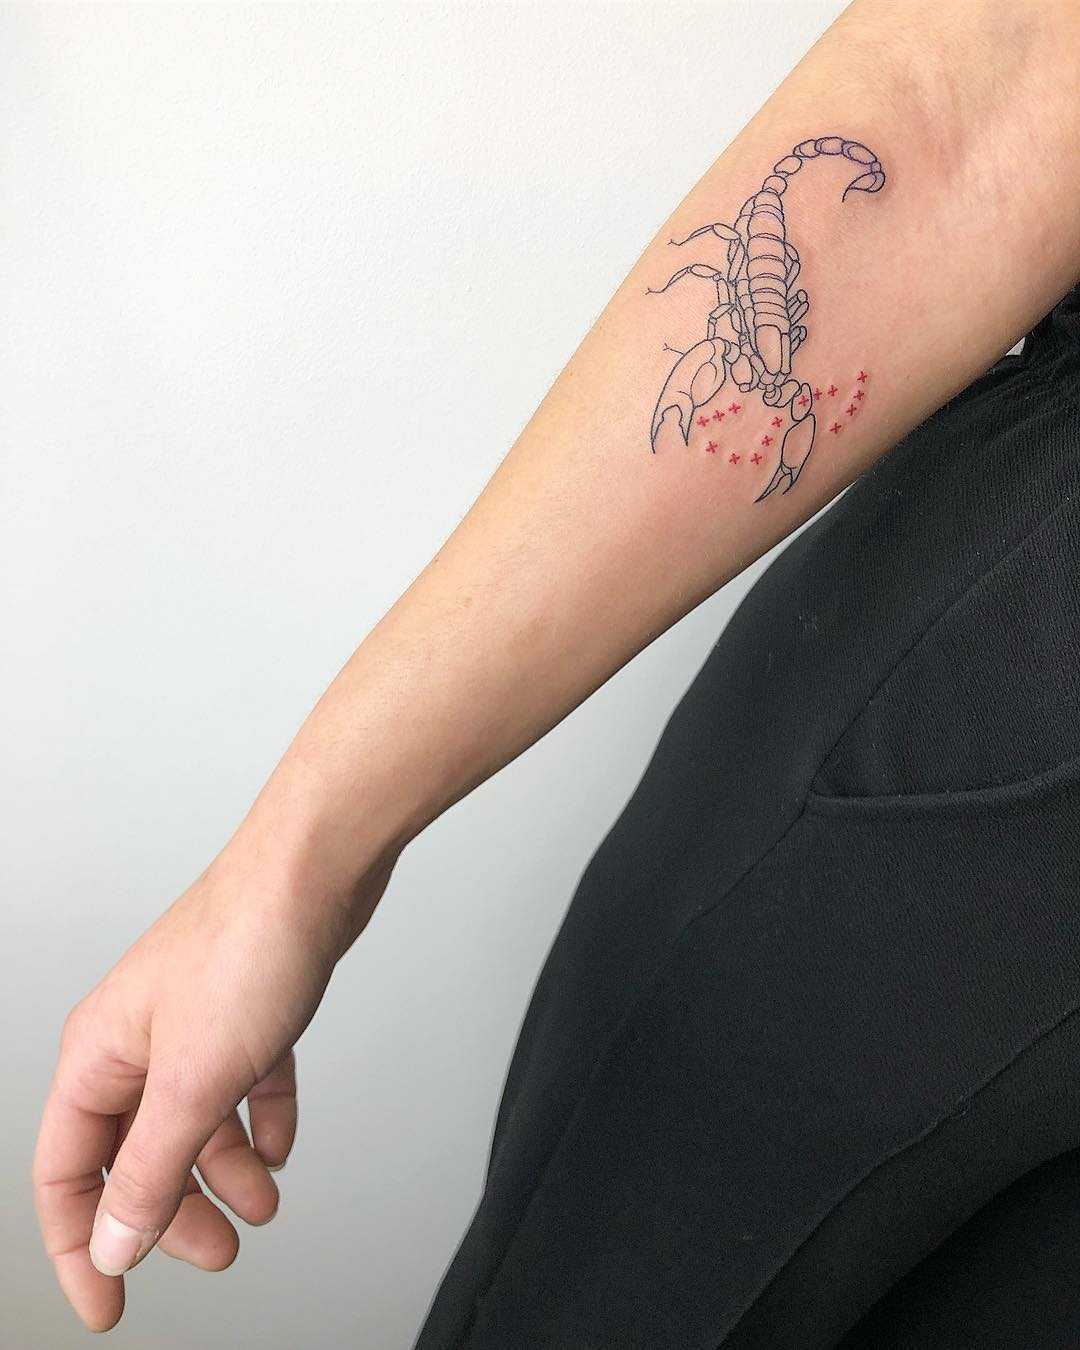 Fineline scorpion tattoo by Loz Thomas